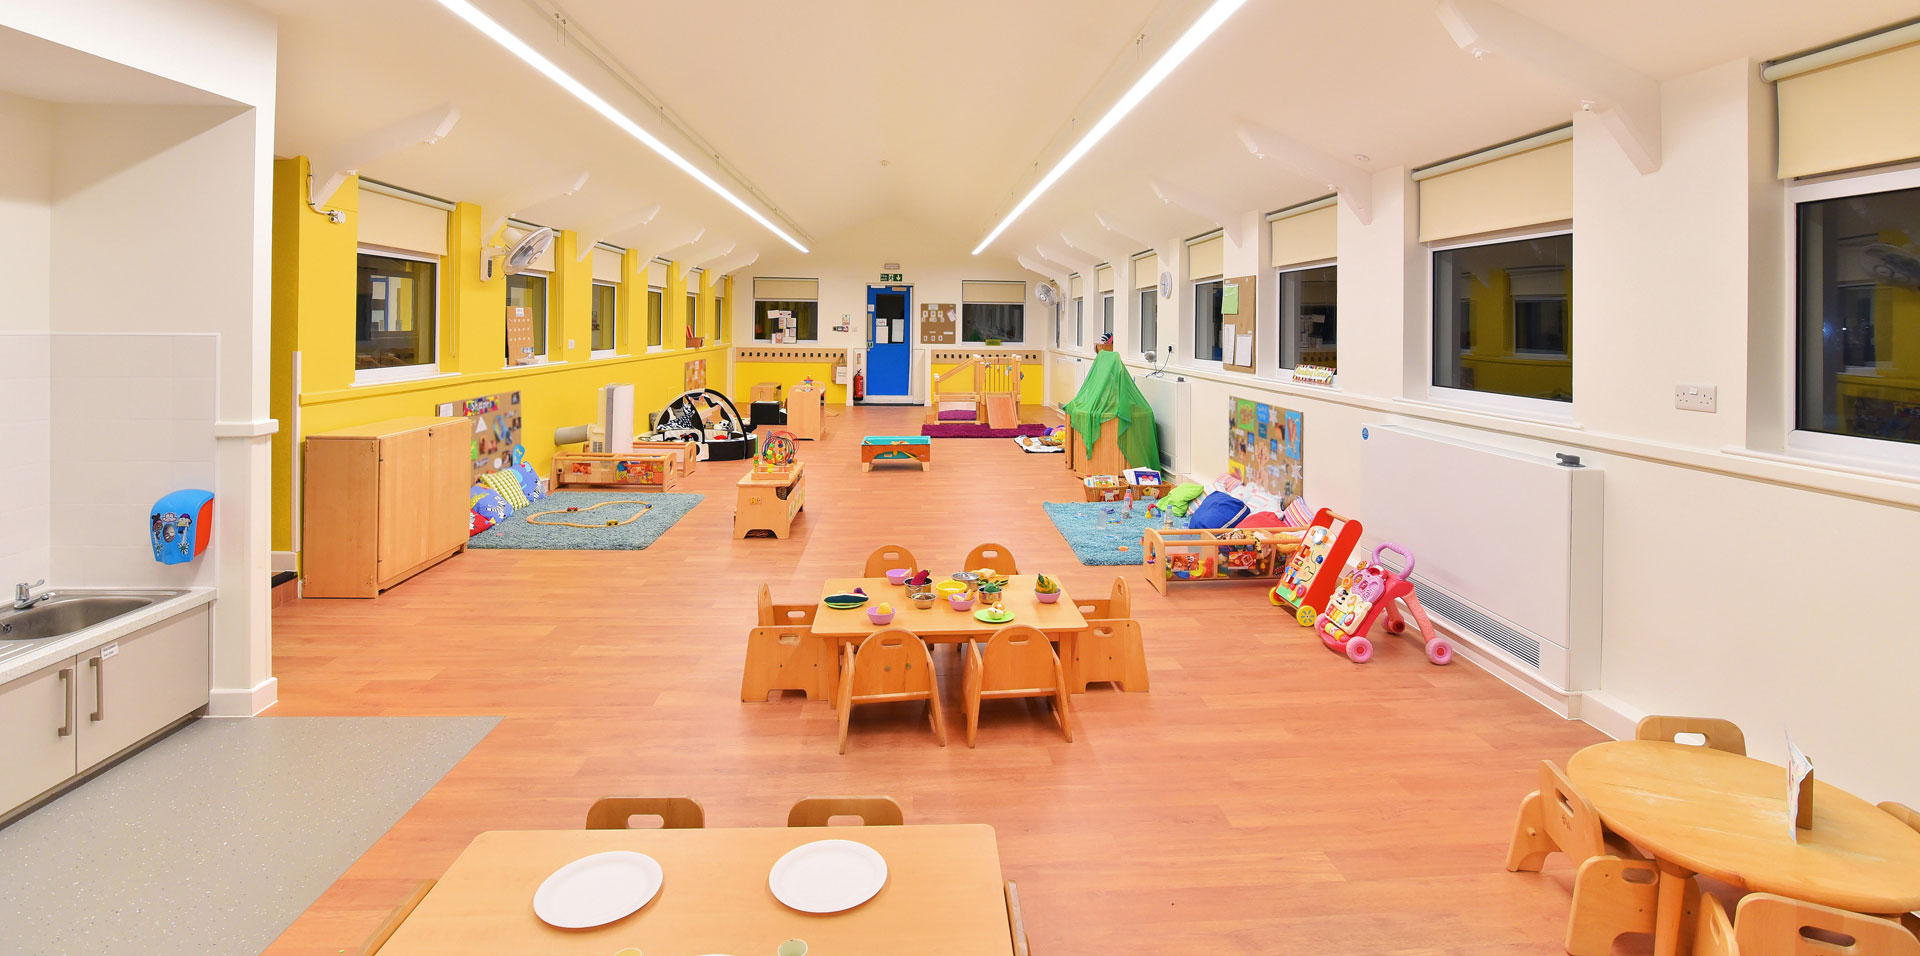 New Eltham Day Nursery and Preschool